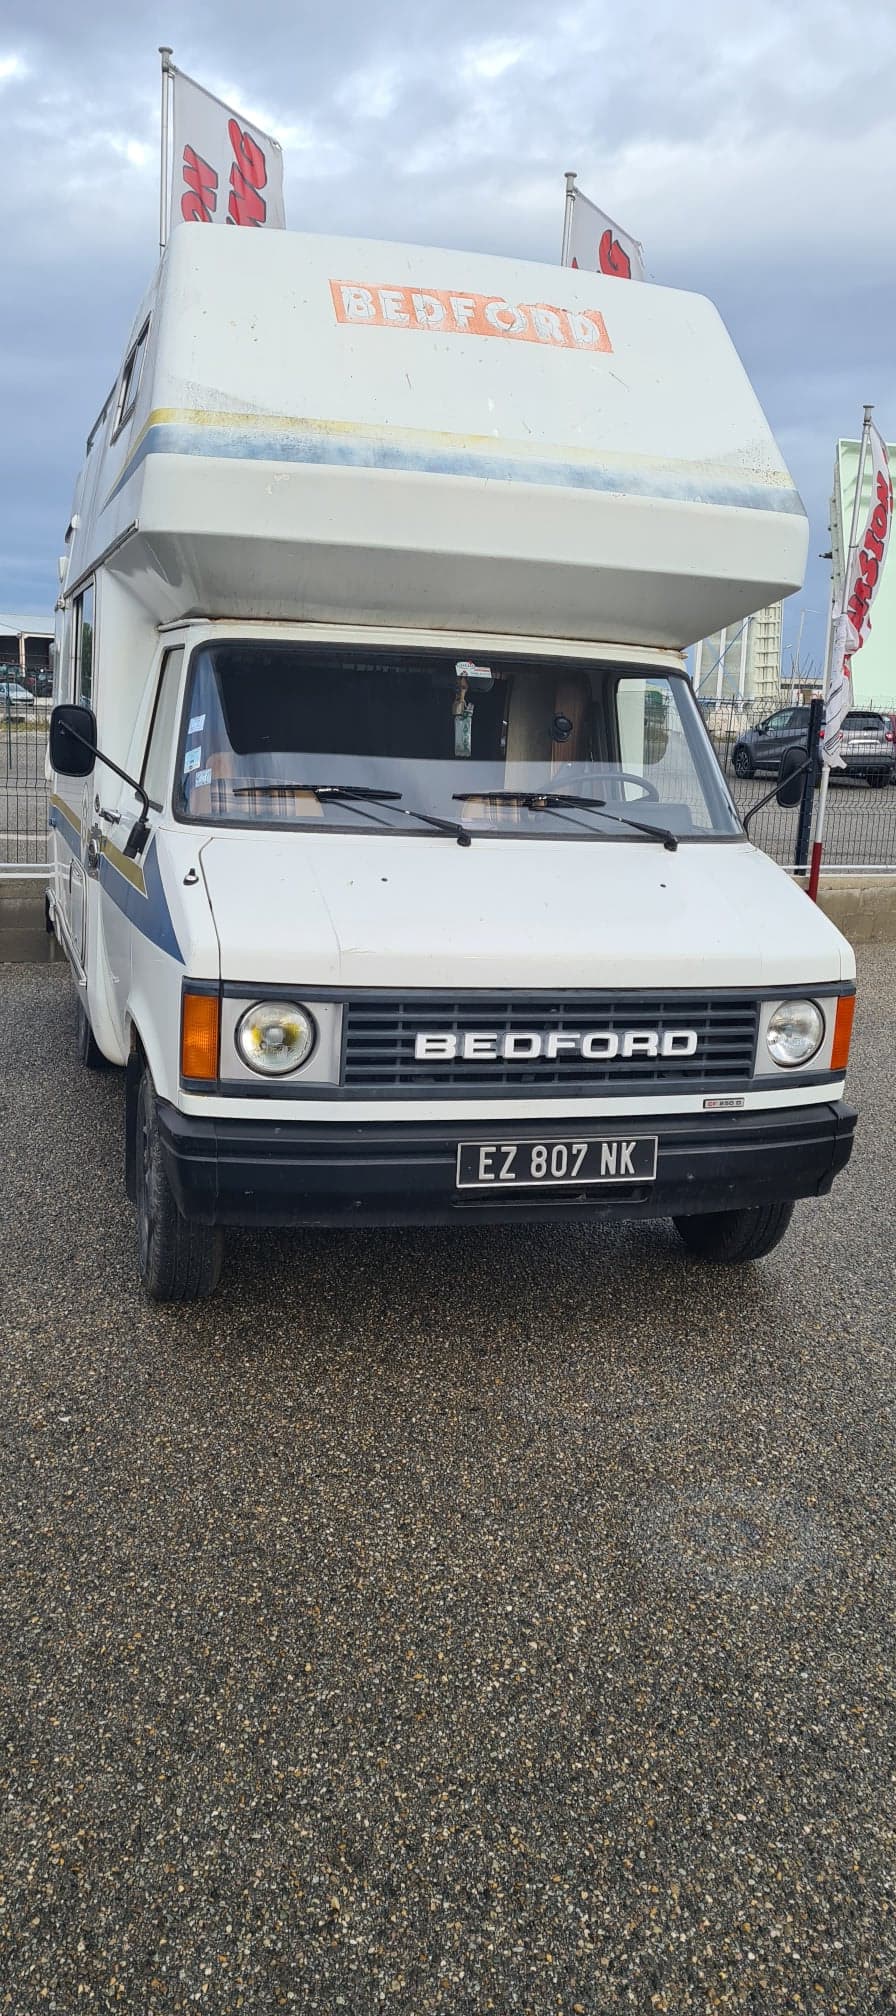 Bedford Navycar 1981 14339810